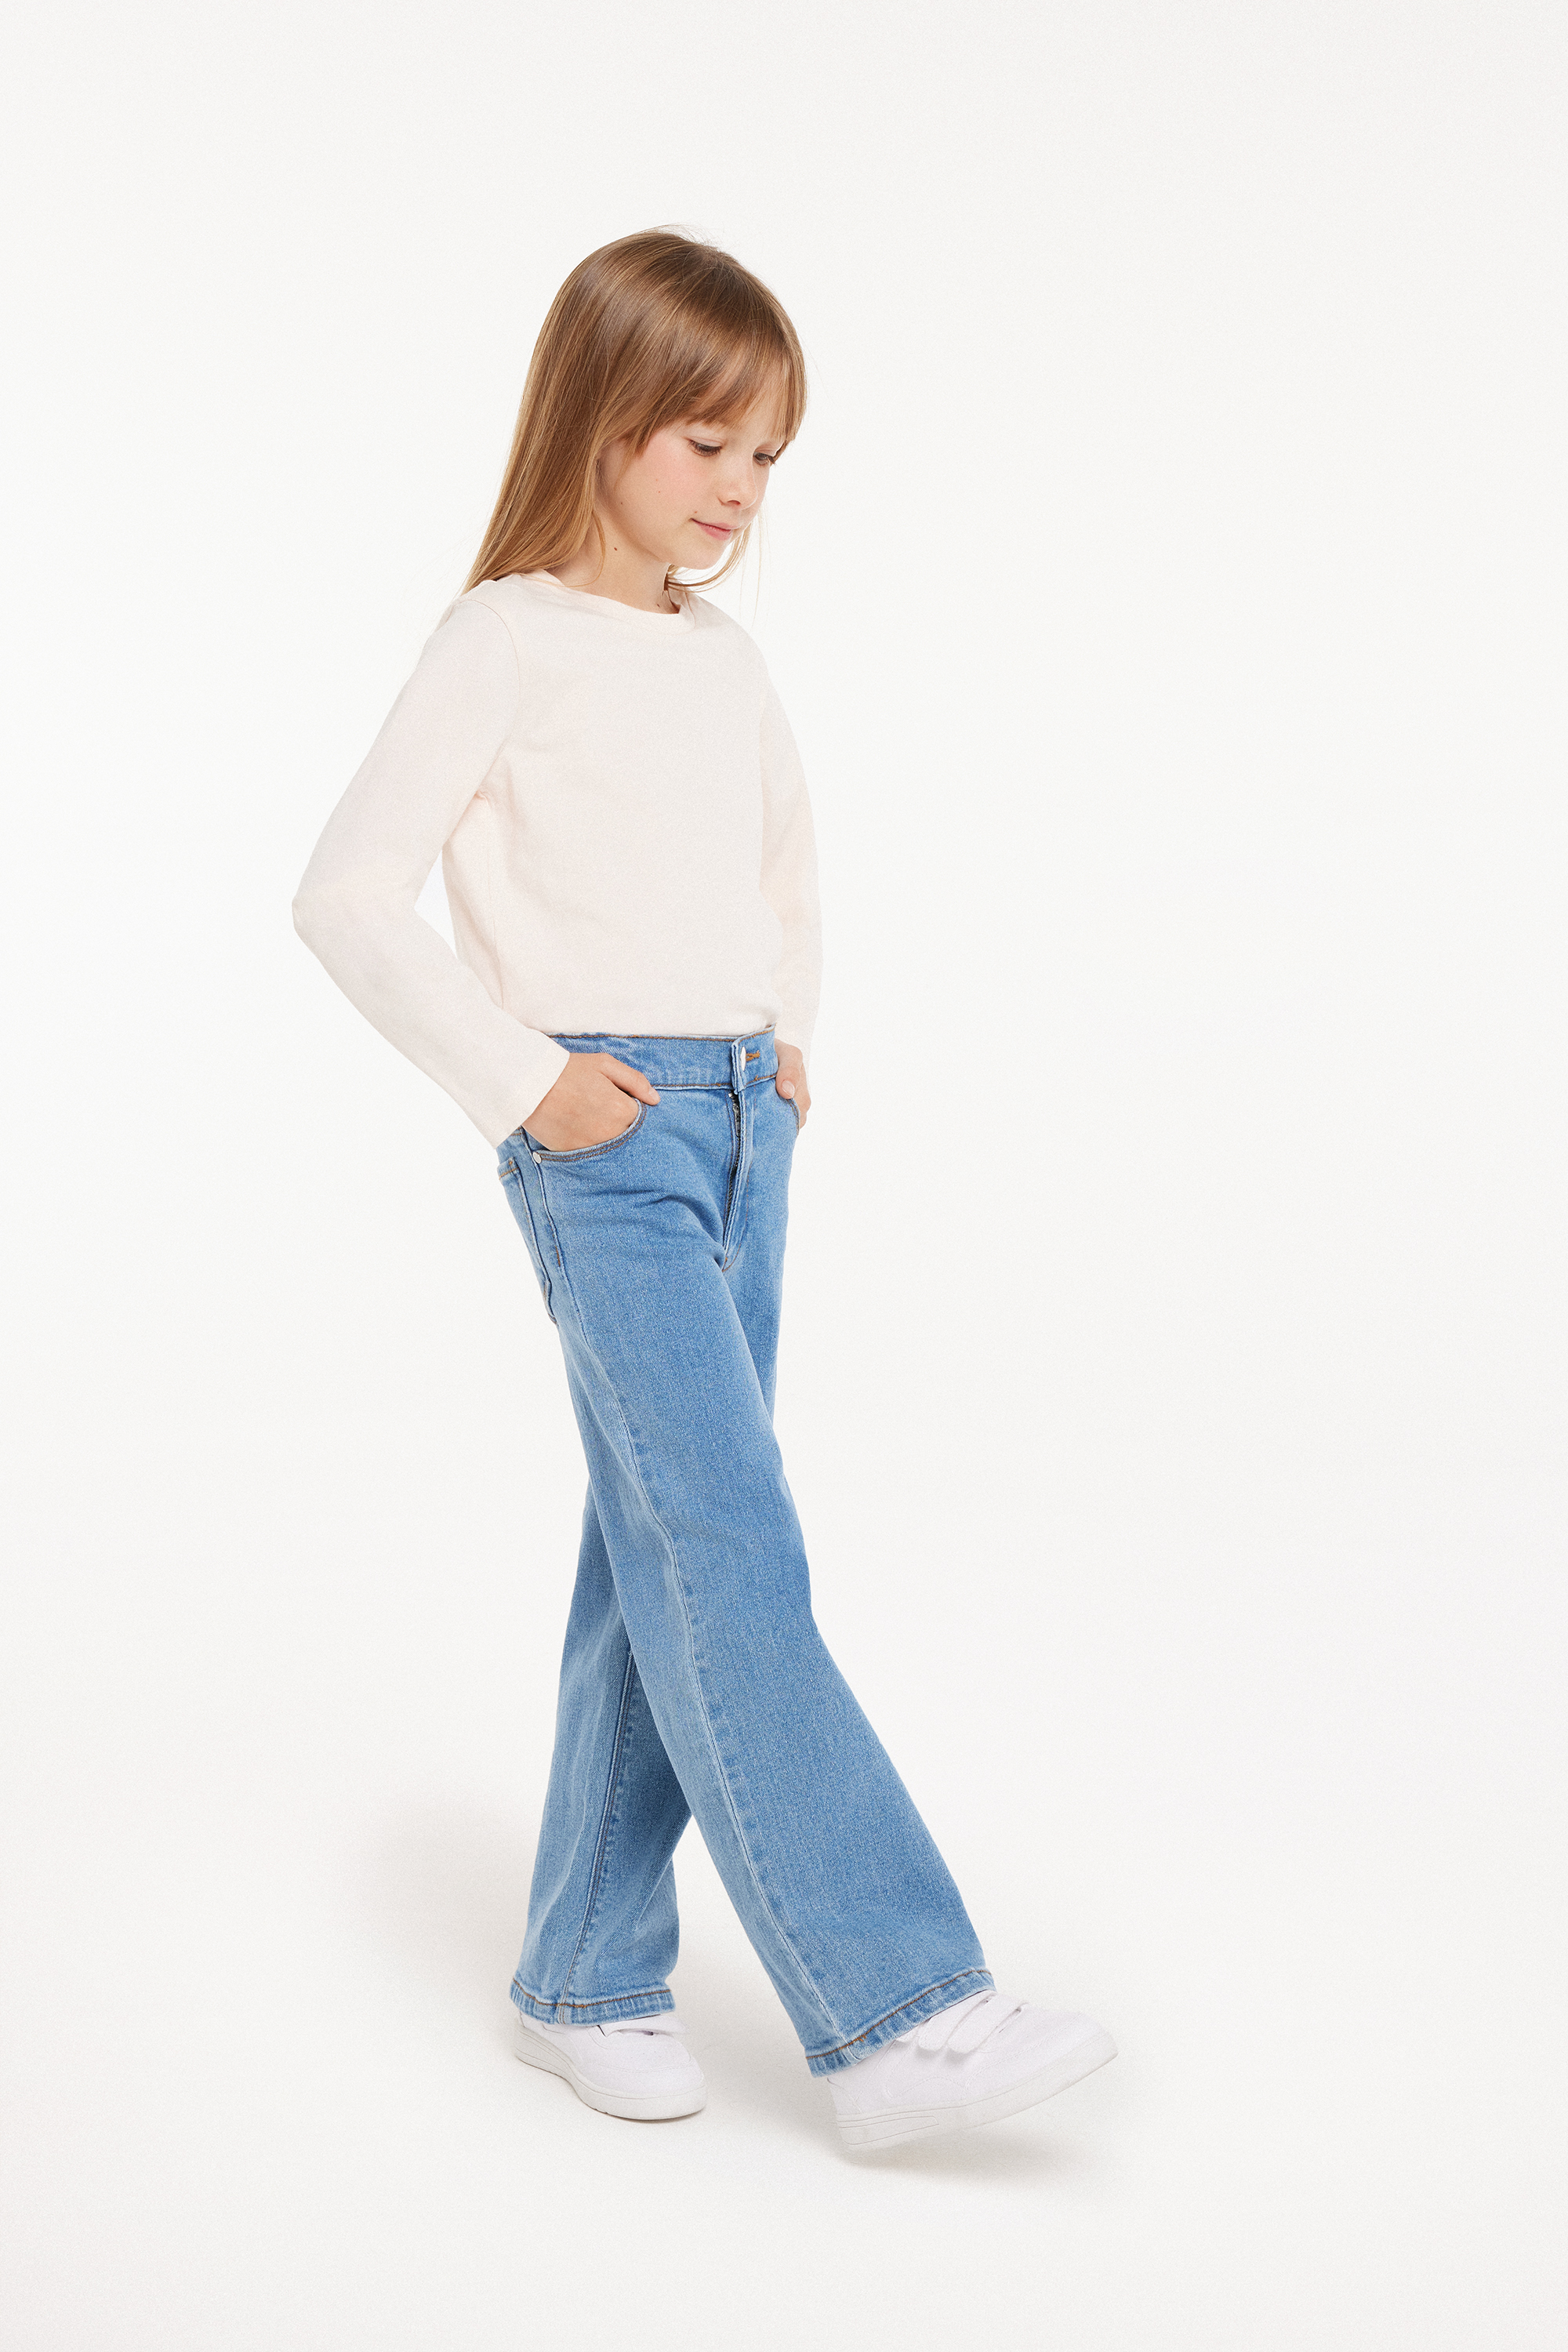 Unisex Kids’ Basic Long-Sleeved Cotton Top